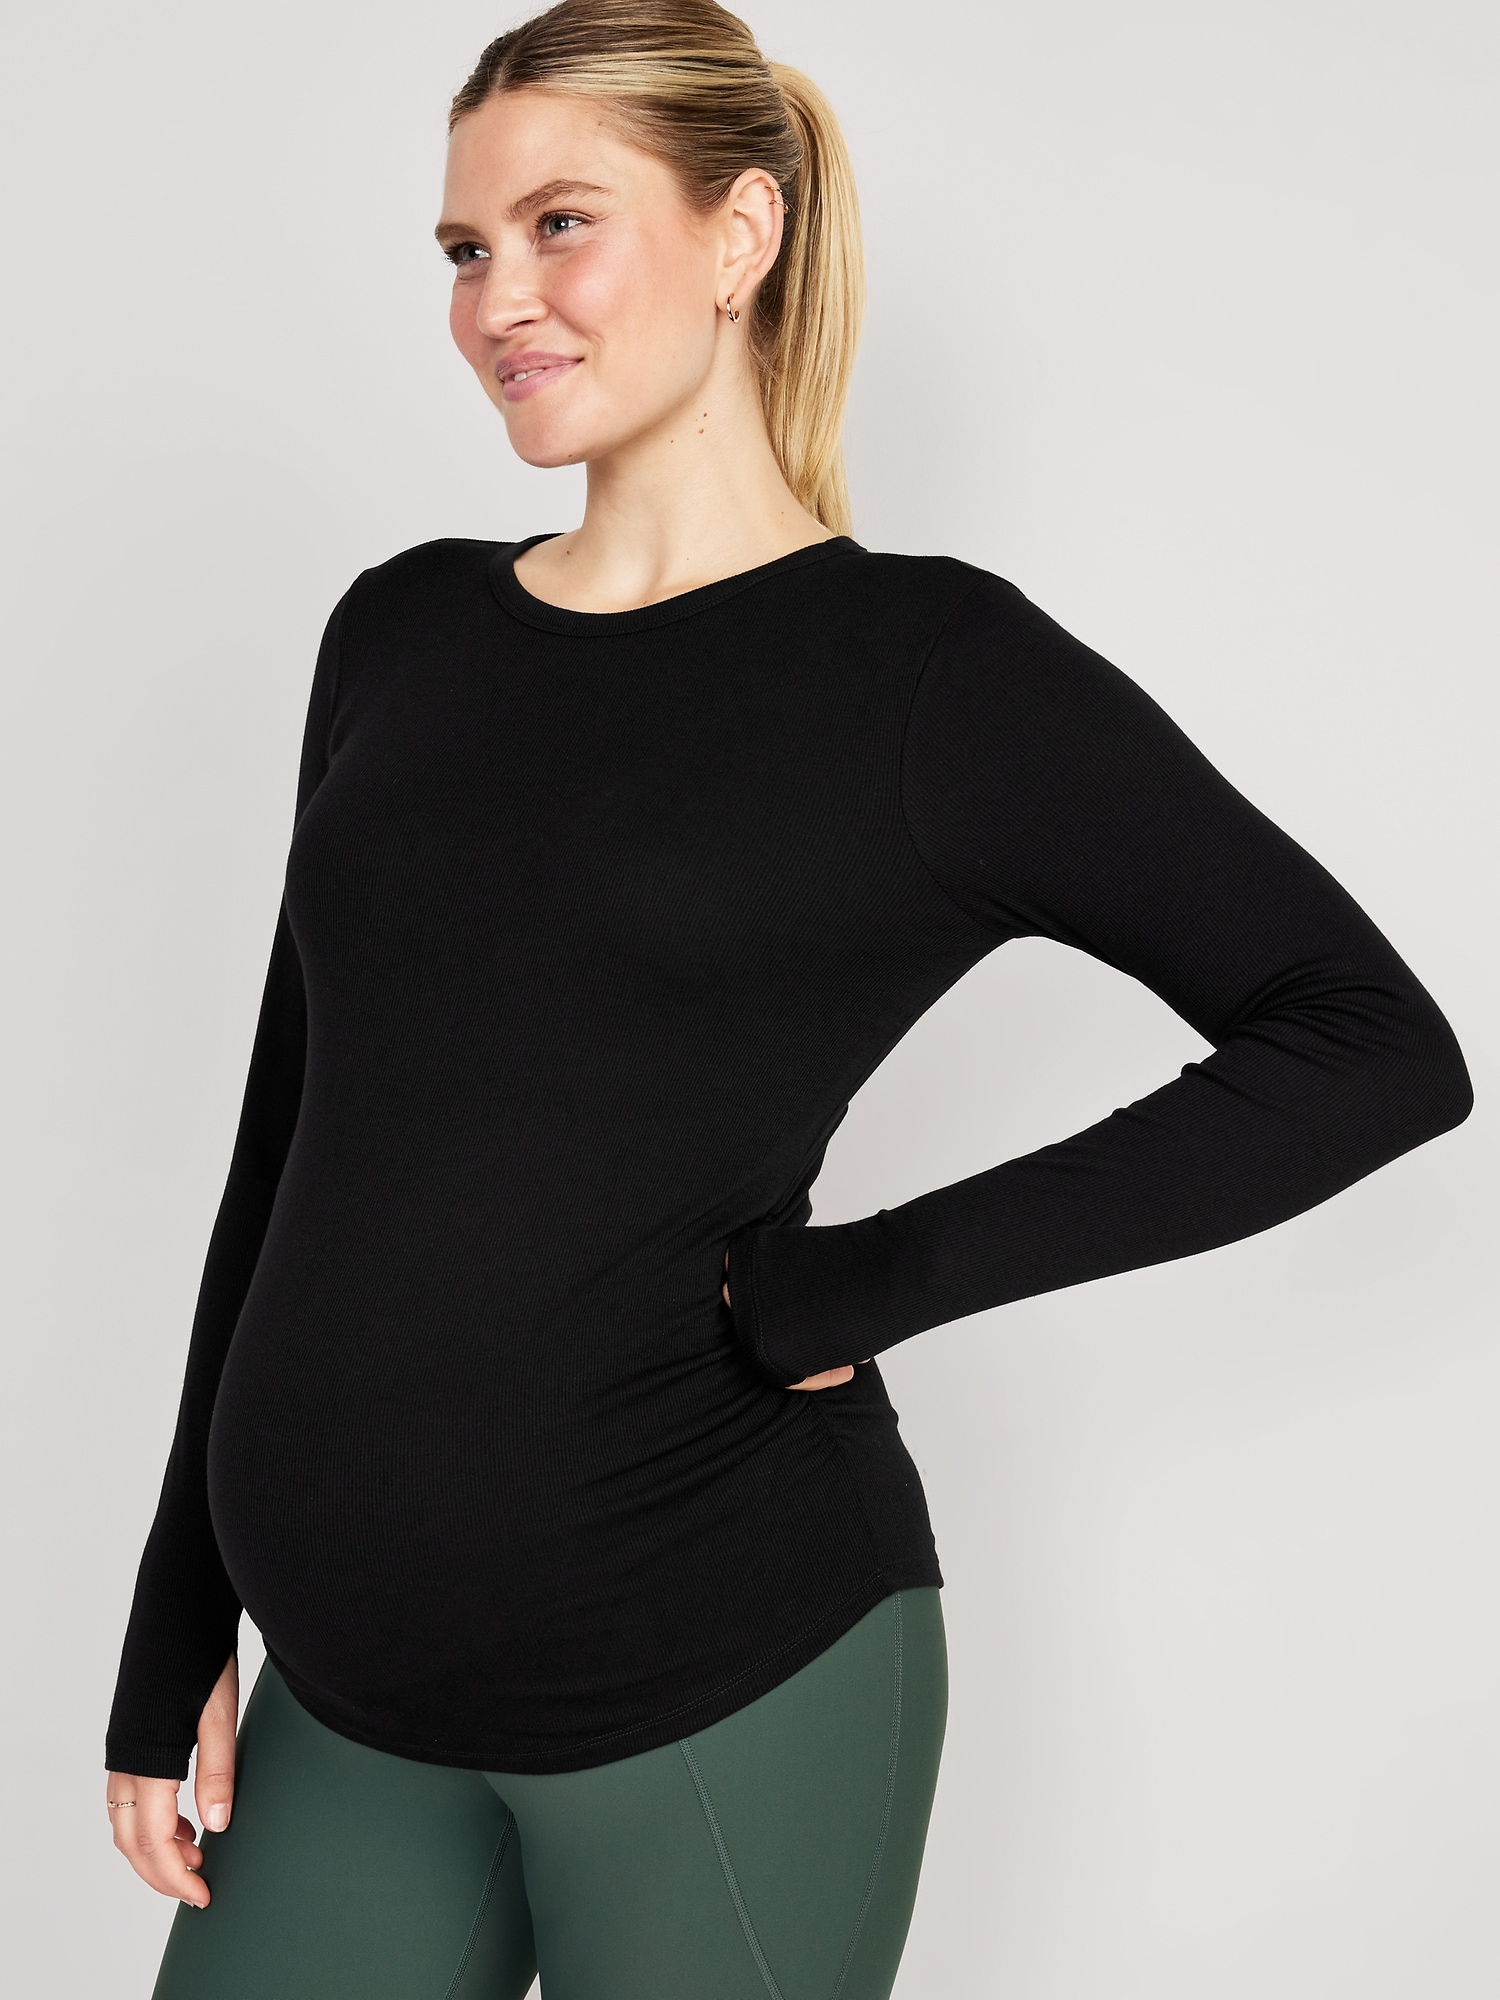 Maternity UltraLite Long-Sleeve T-Shirt